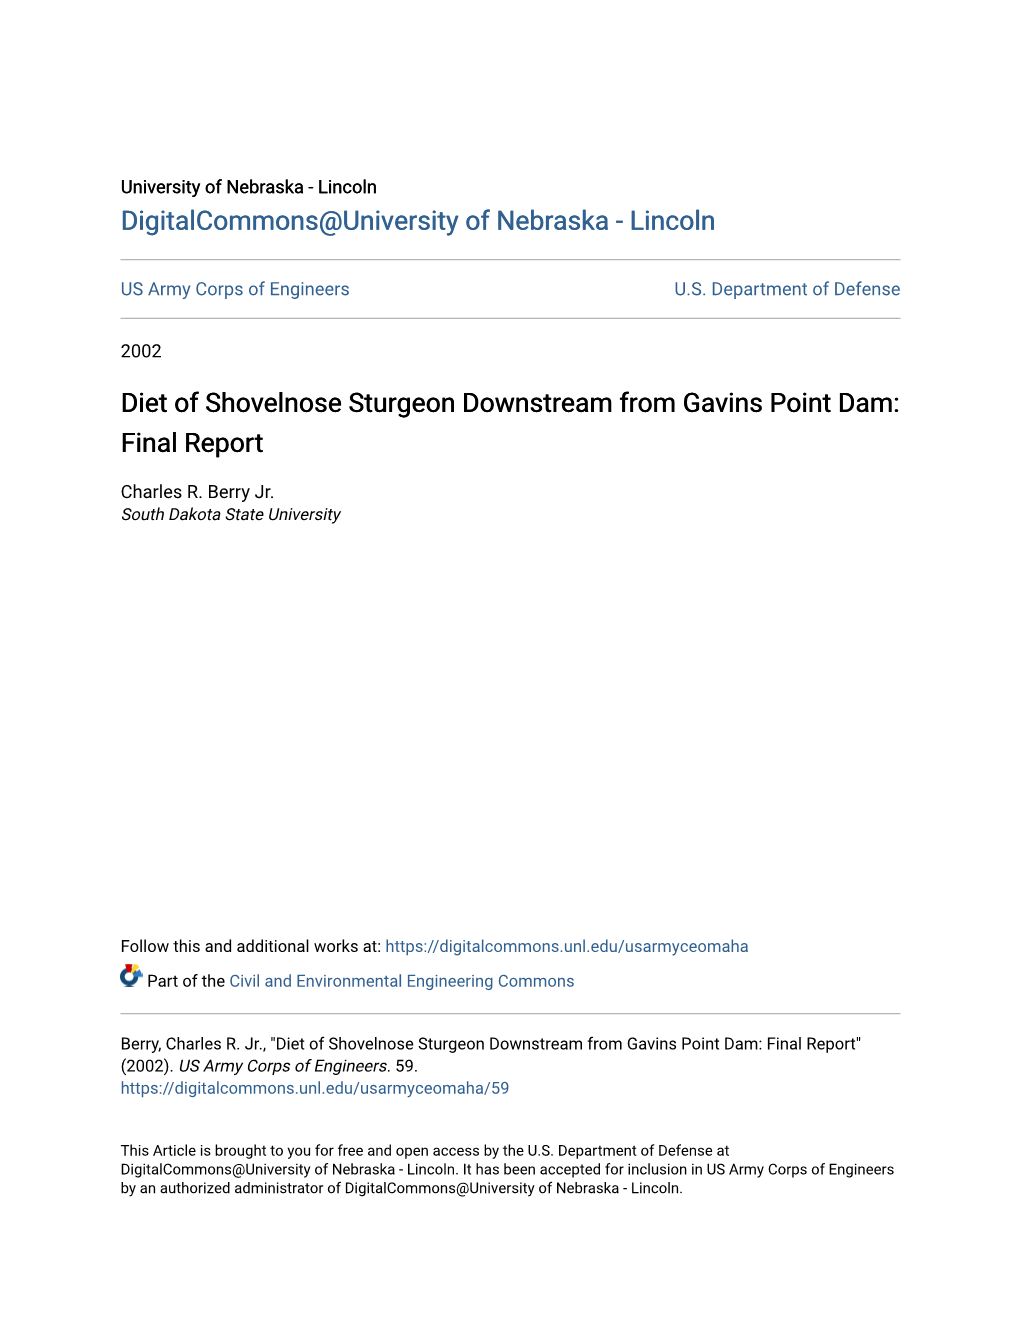 Diet of Shovelnose Sturgeon Downstream from Gavins Point Dam: Final Report